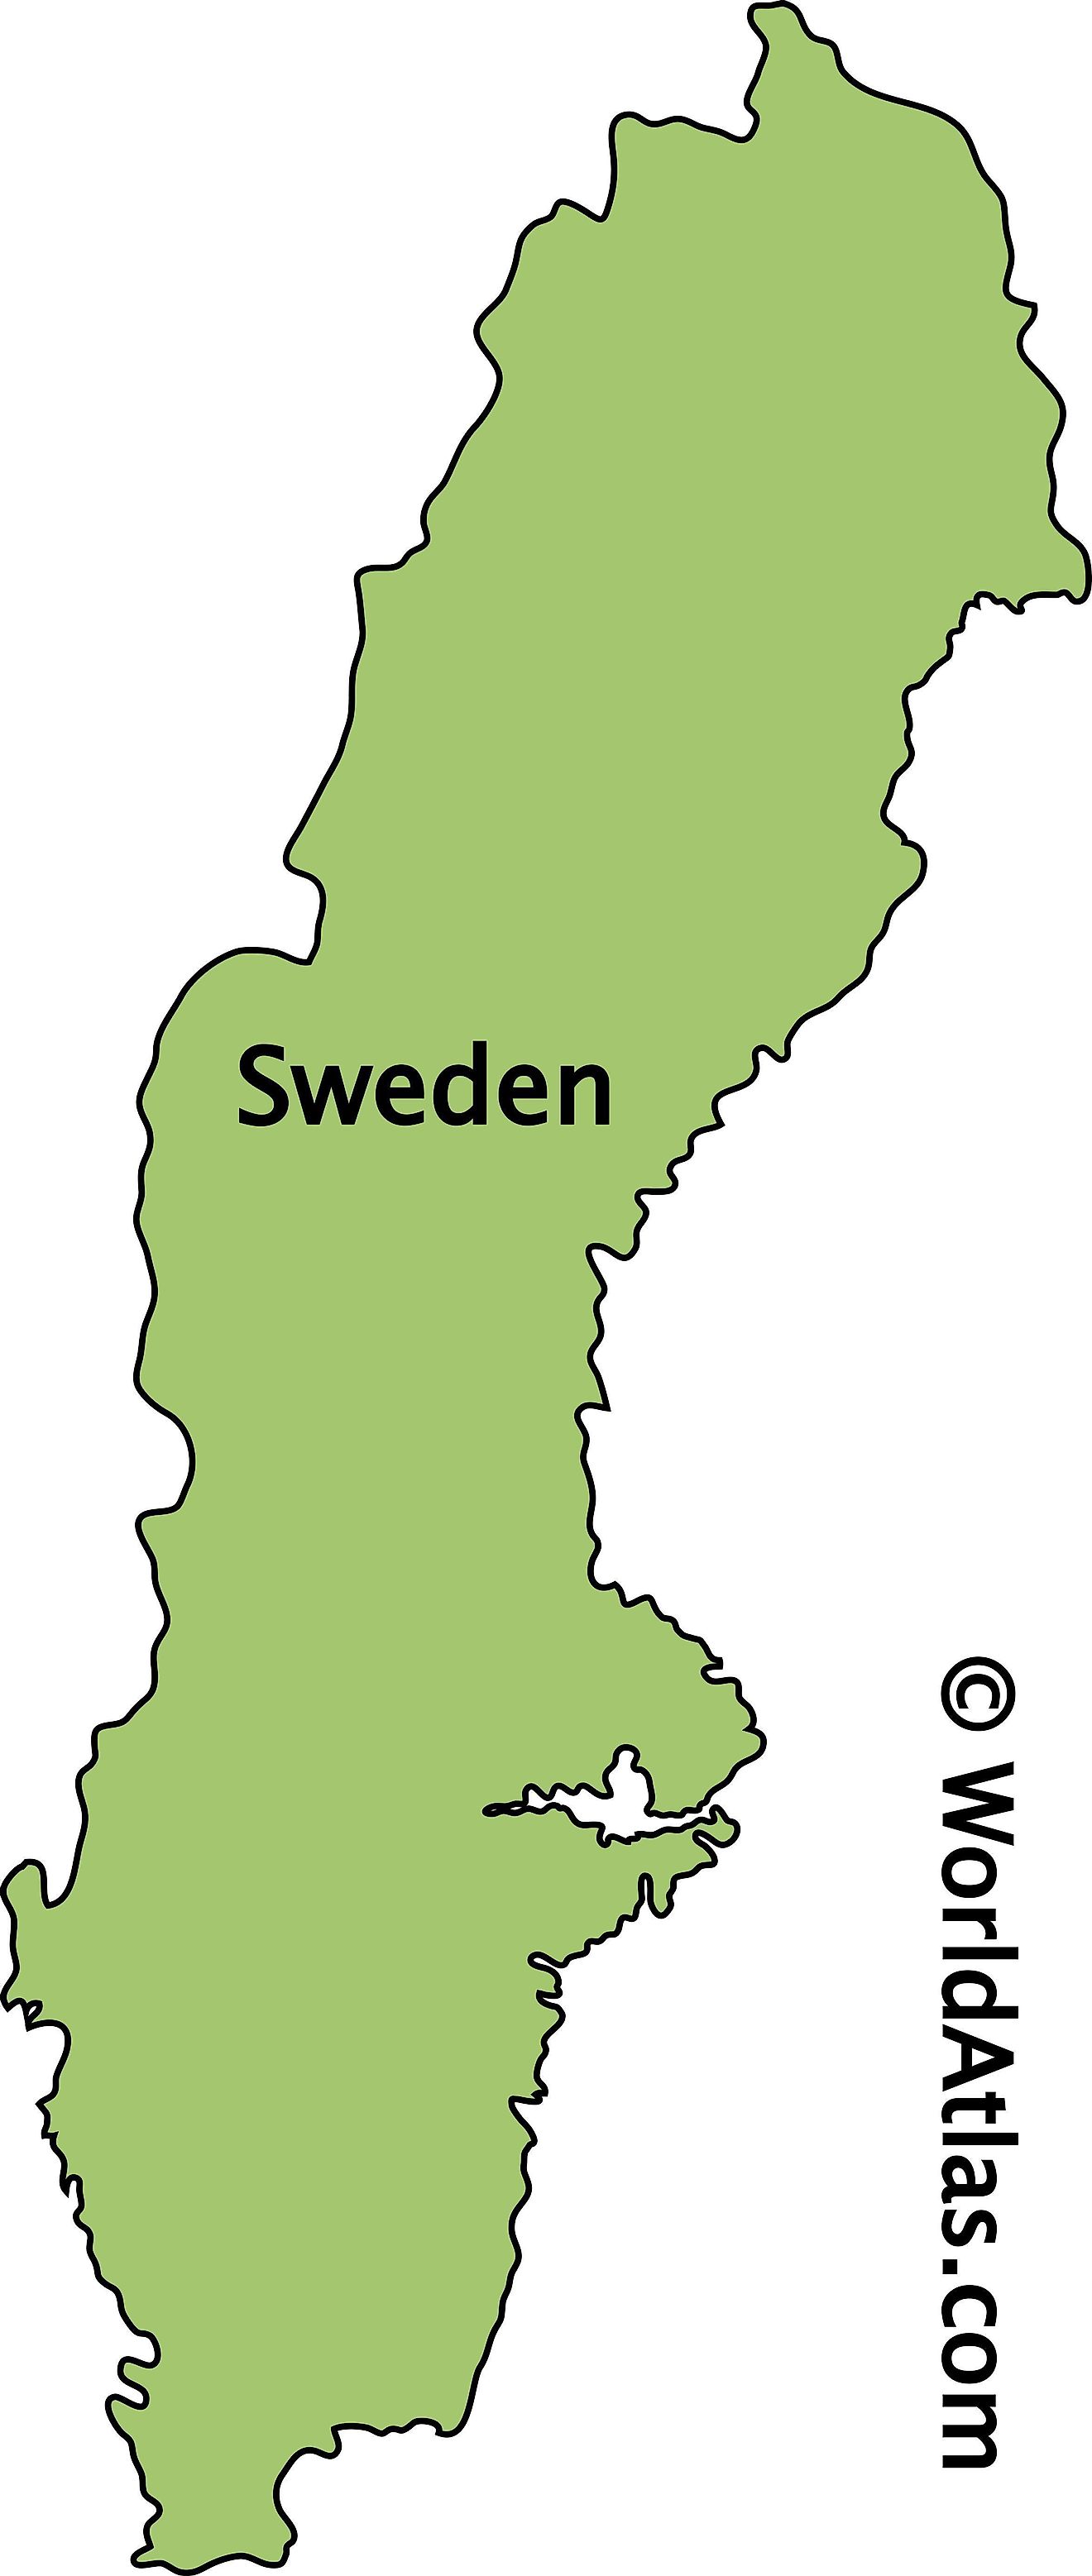 Sweden Maps & Facts - World Atlas